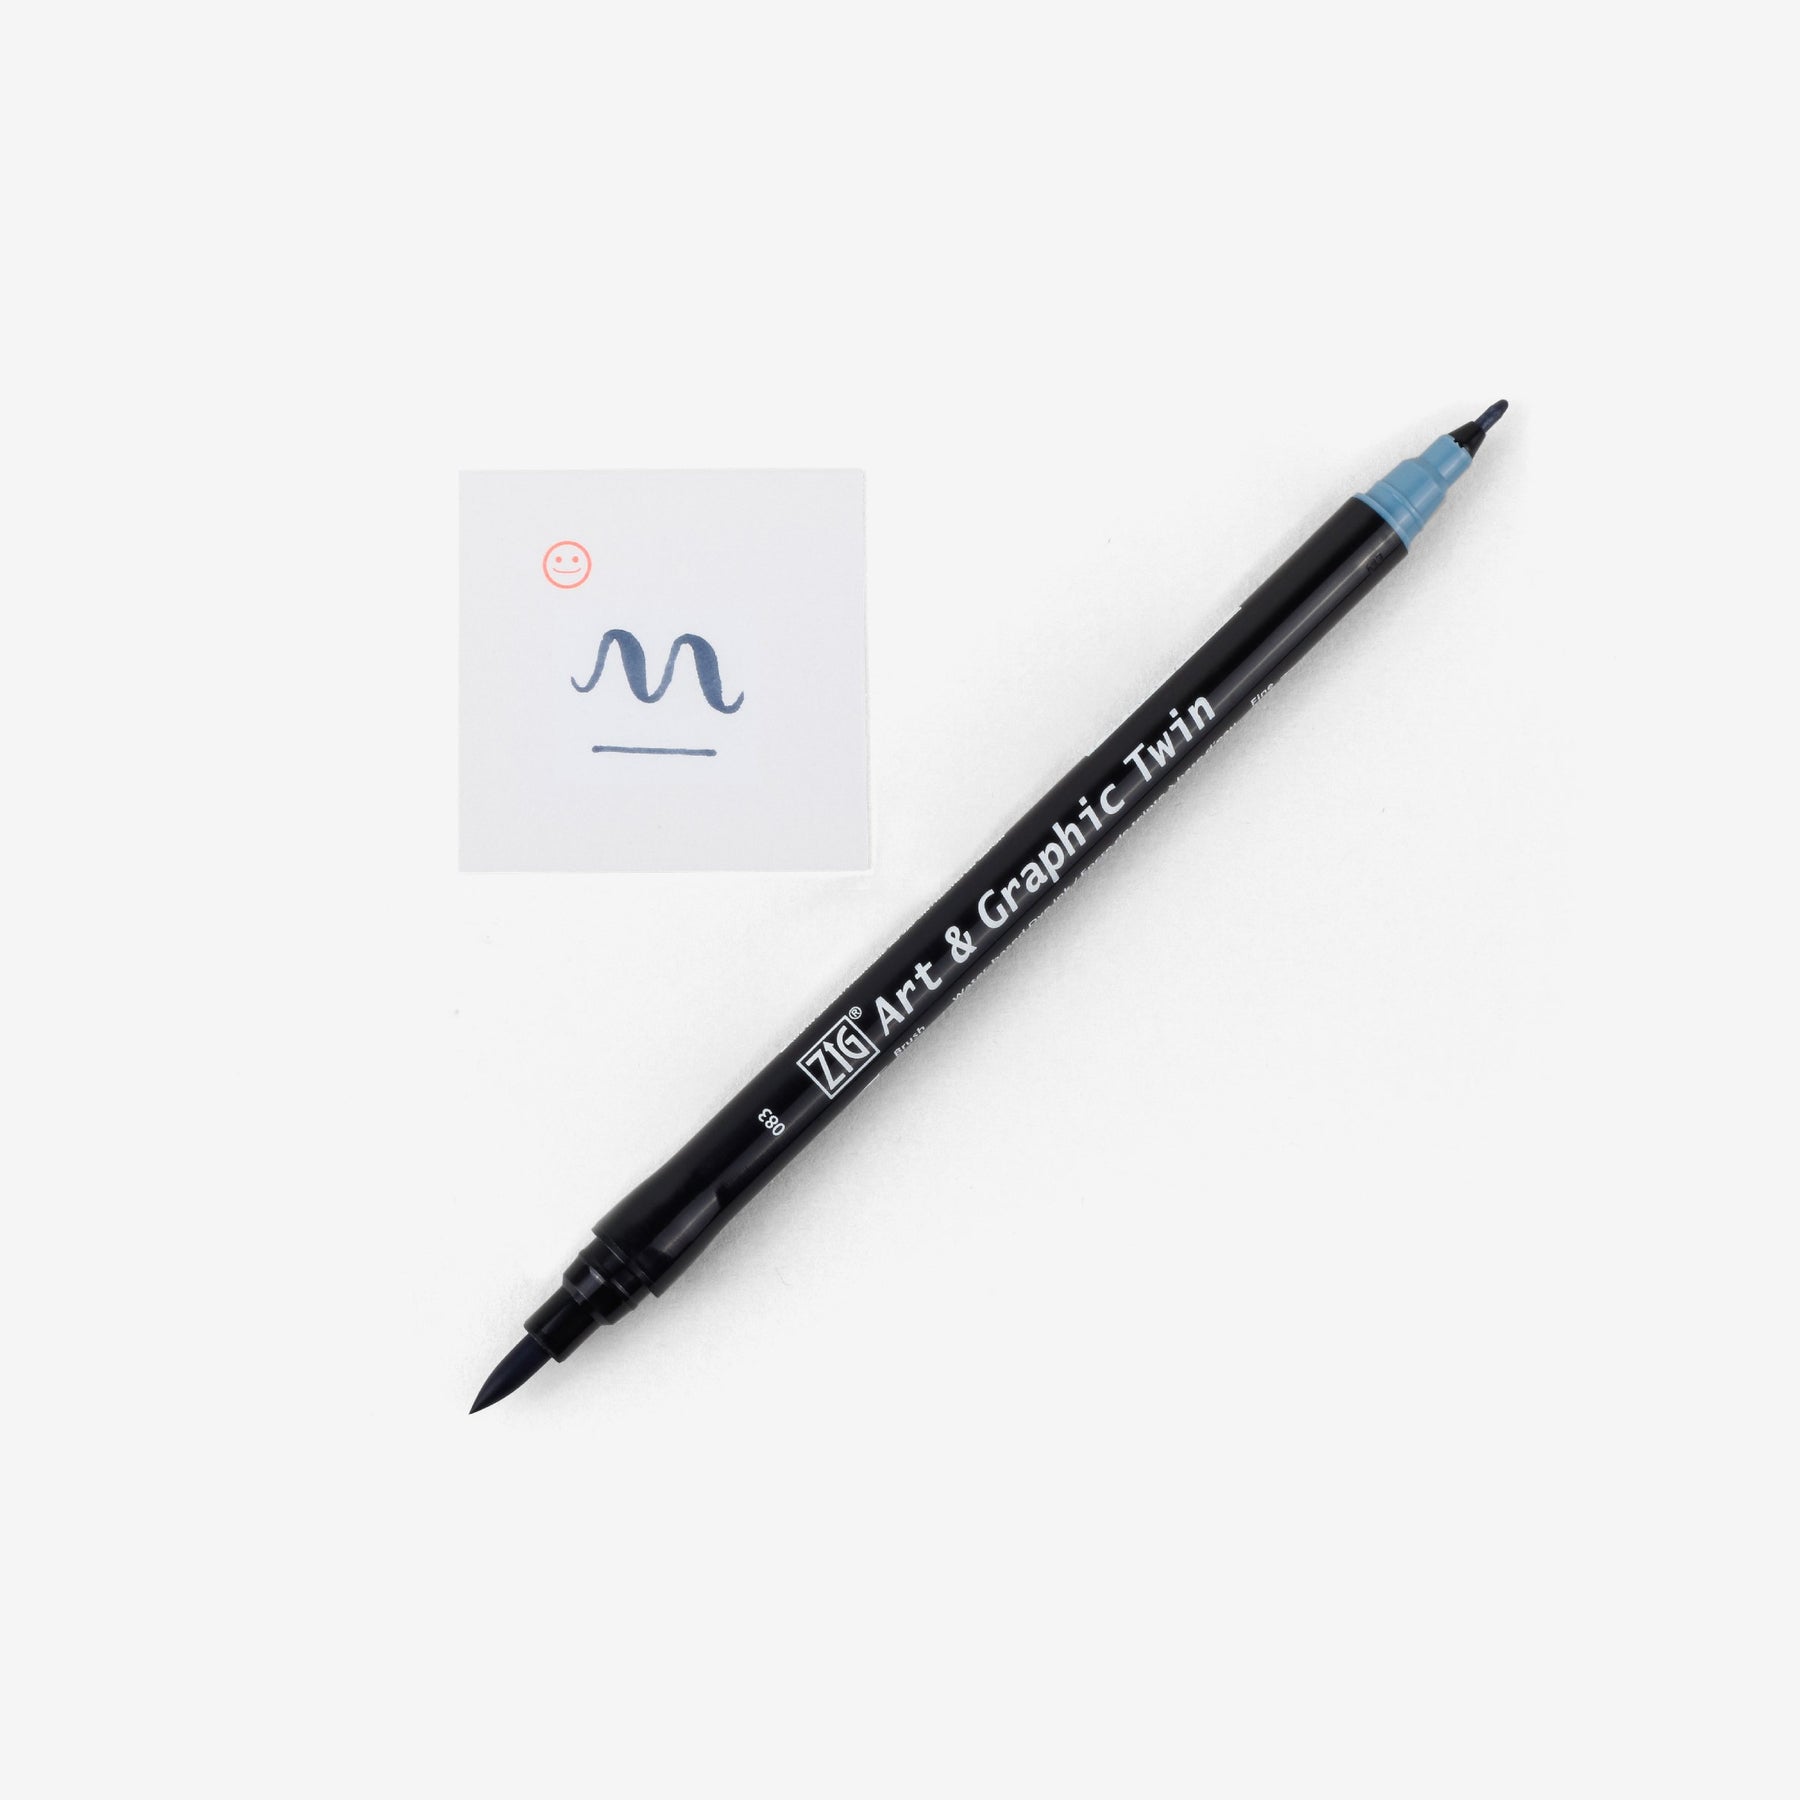 Kuretake Art & Graphic Twin Pen - Blue Gray